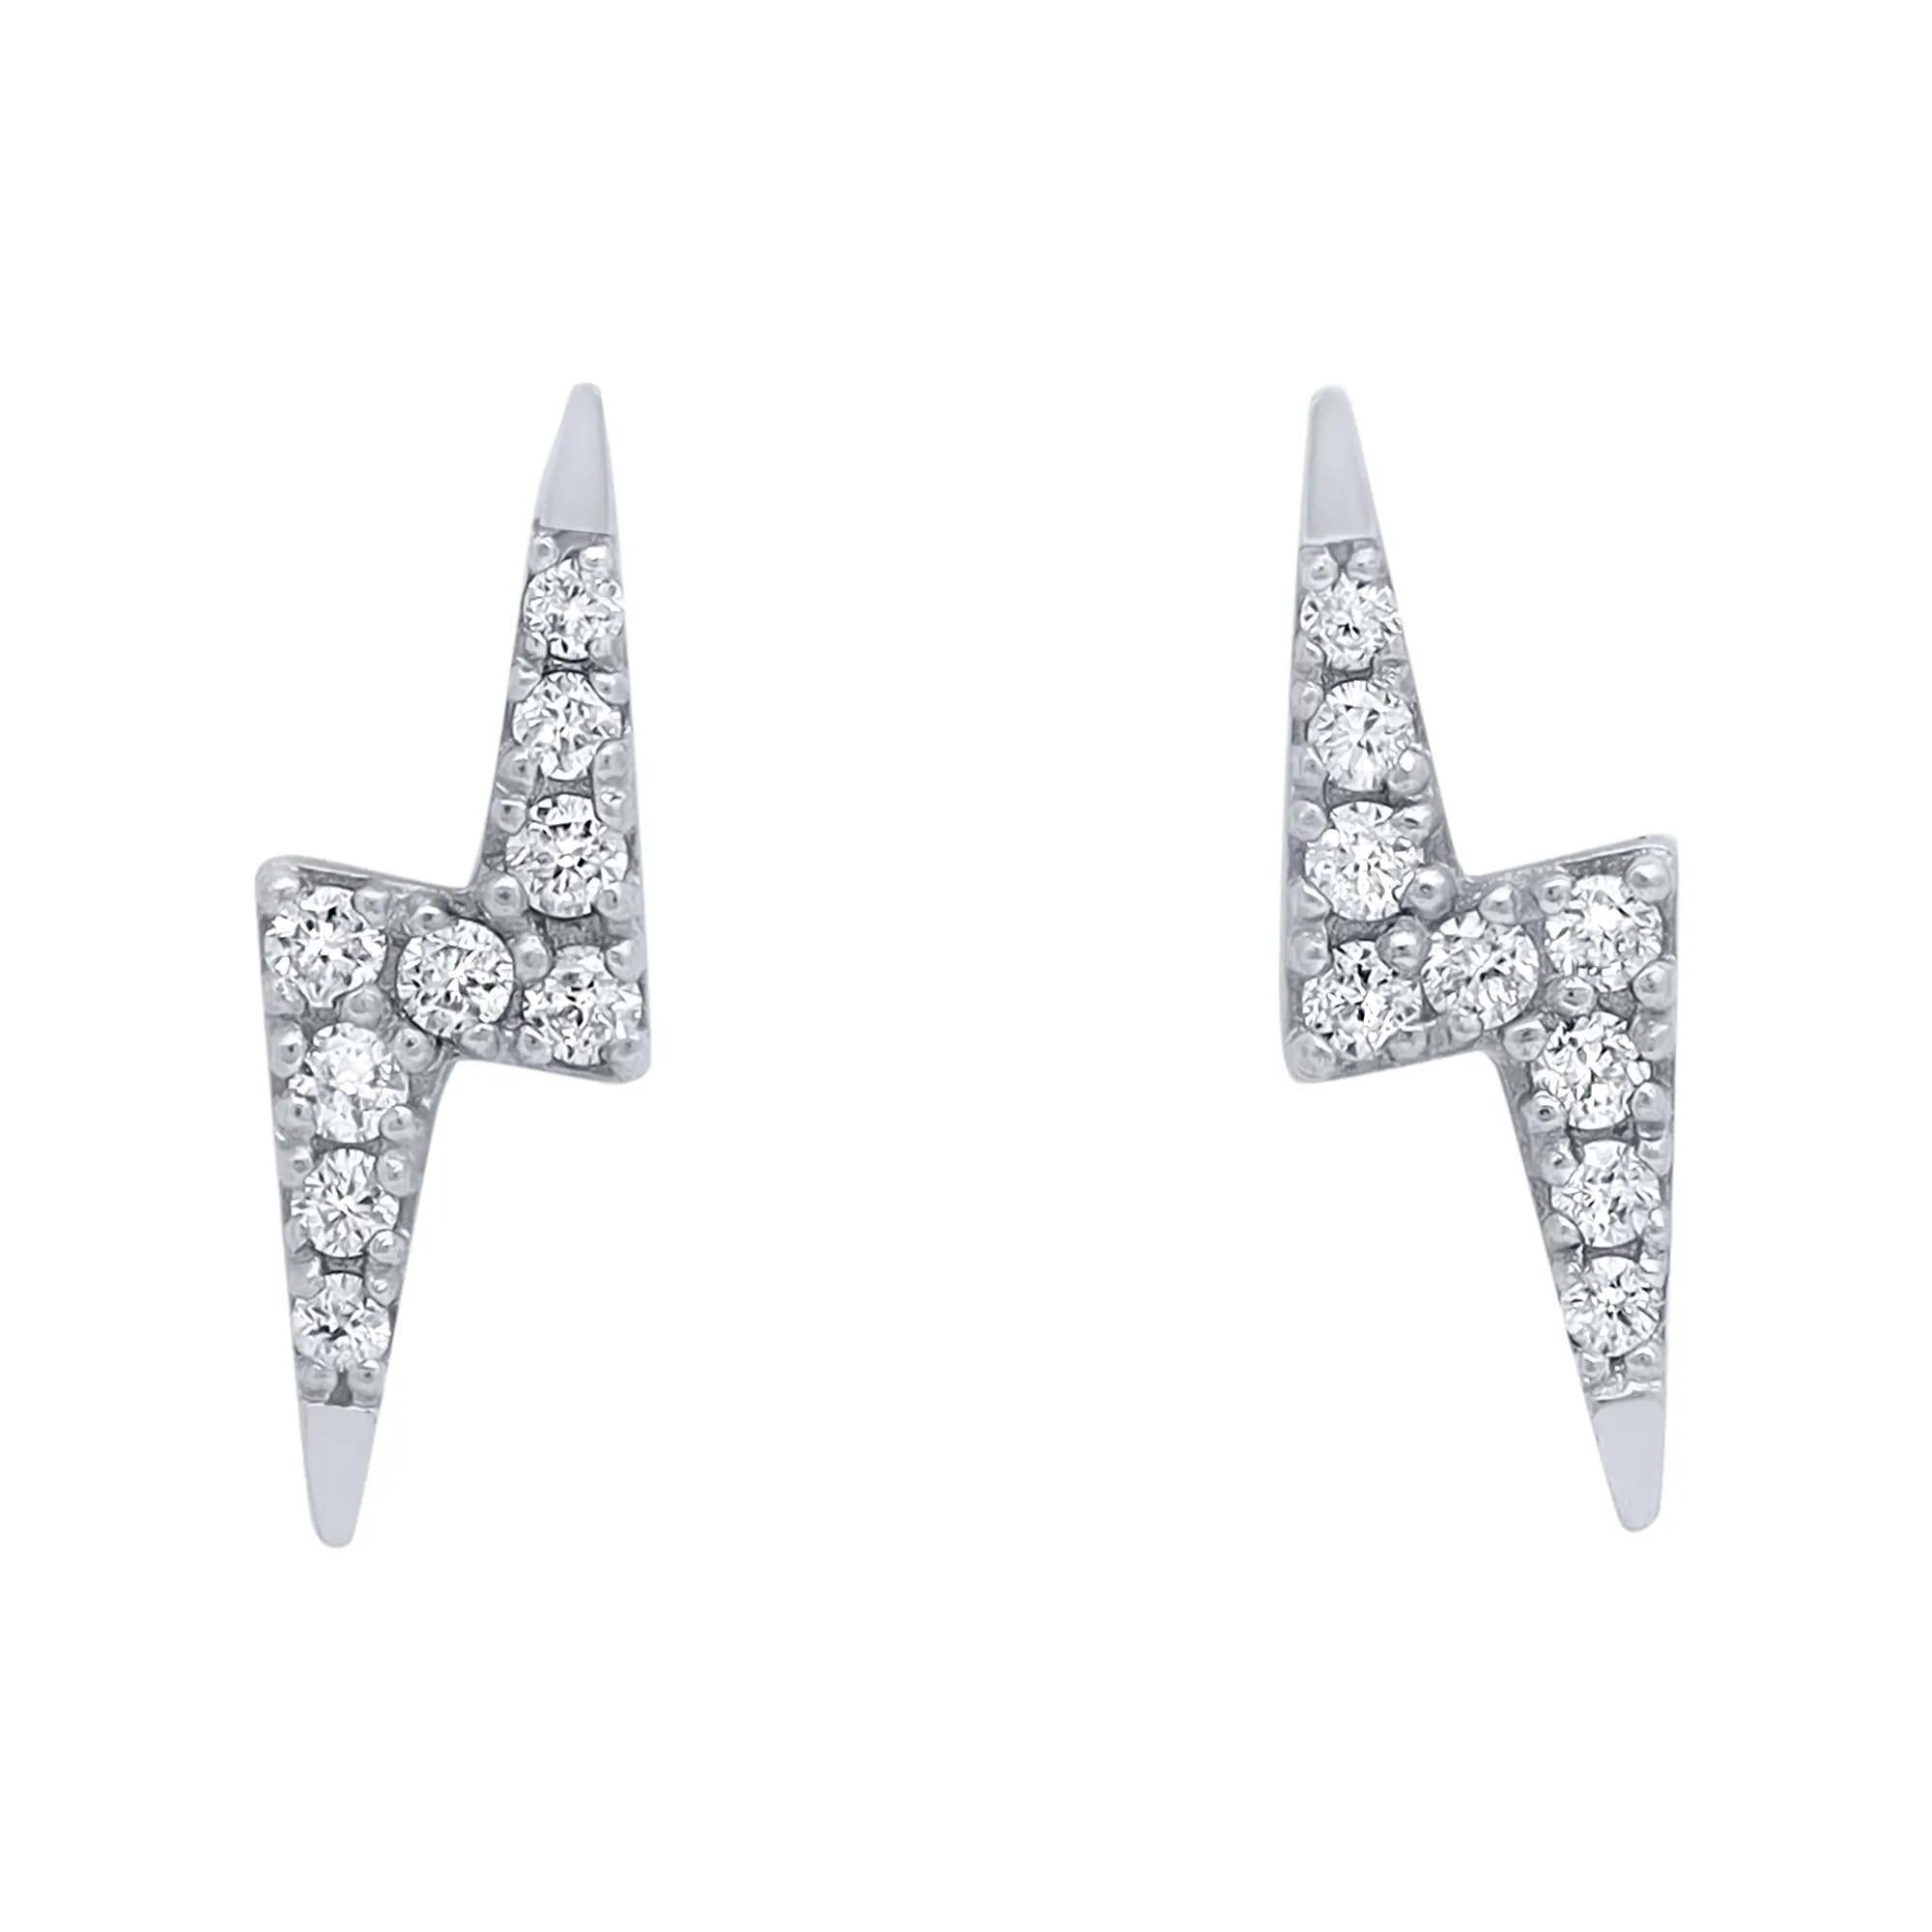 Rachel Koen 0.10cttw Round Cut Diamond Lightning Stud Earrings 14k White Gold In New Condition For Sale In New York, NY